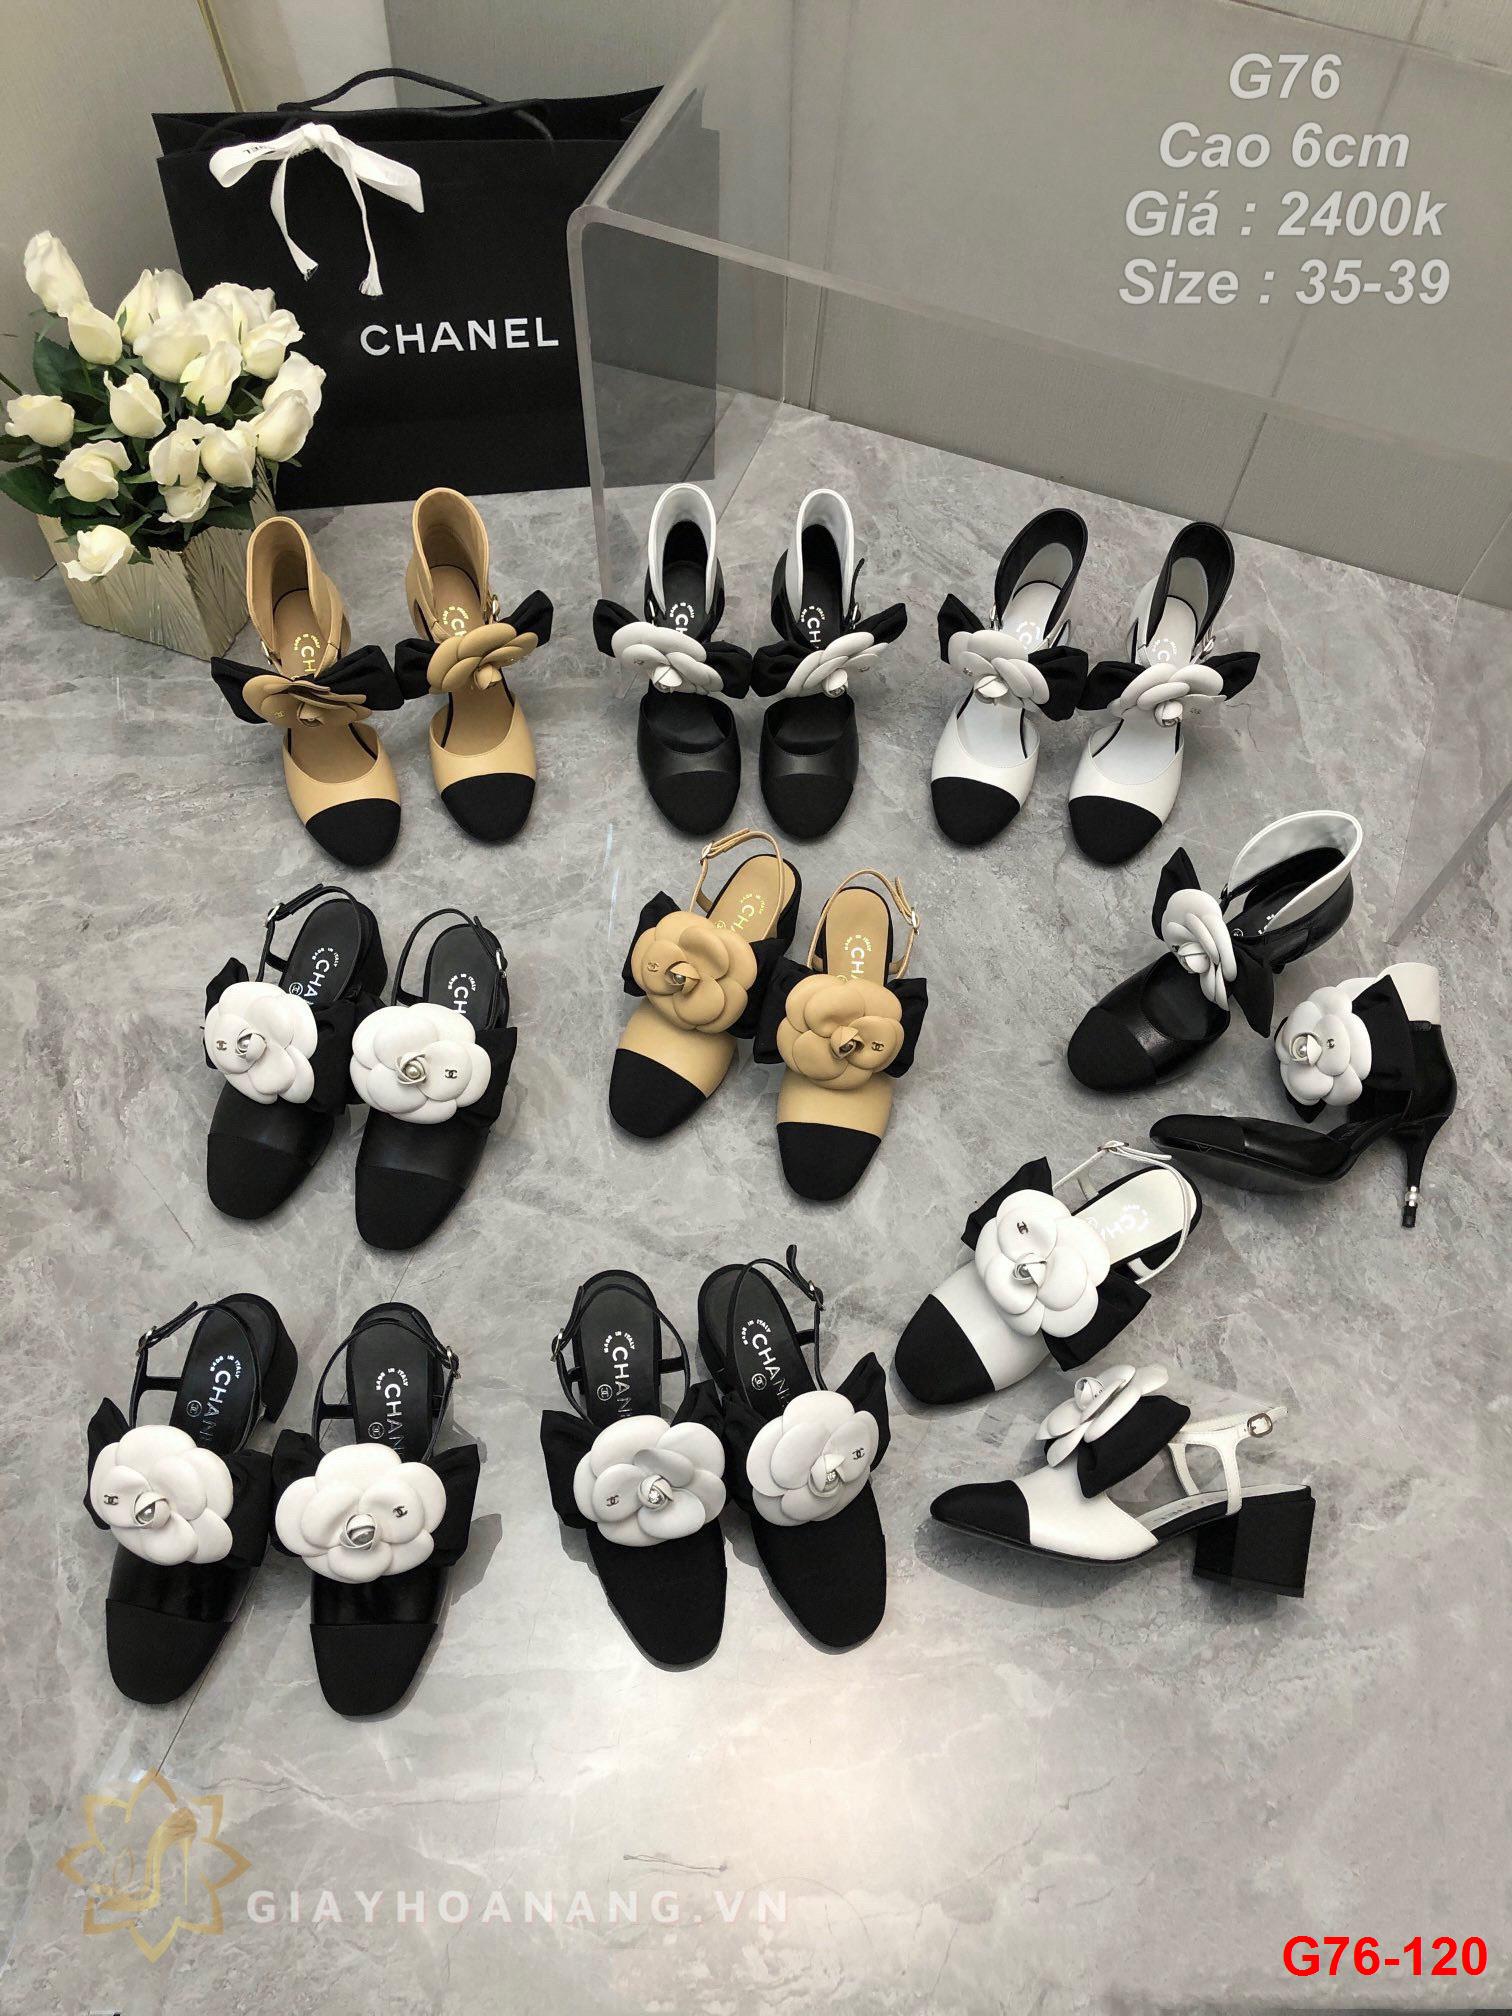 G76-120 Chanel sandal cao 6cm siêu cấp